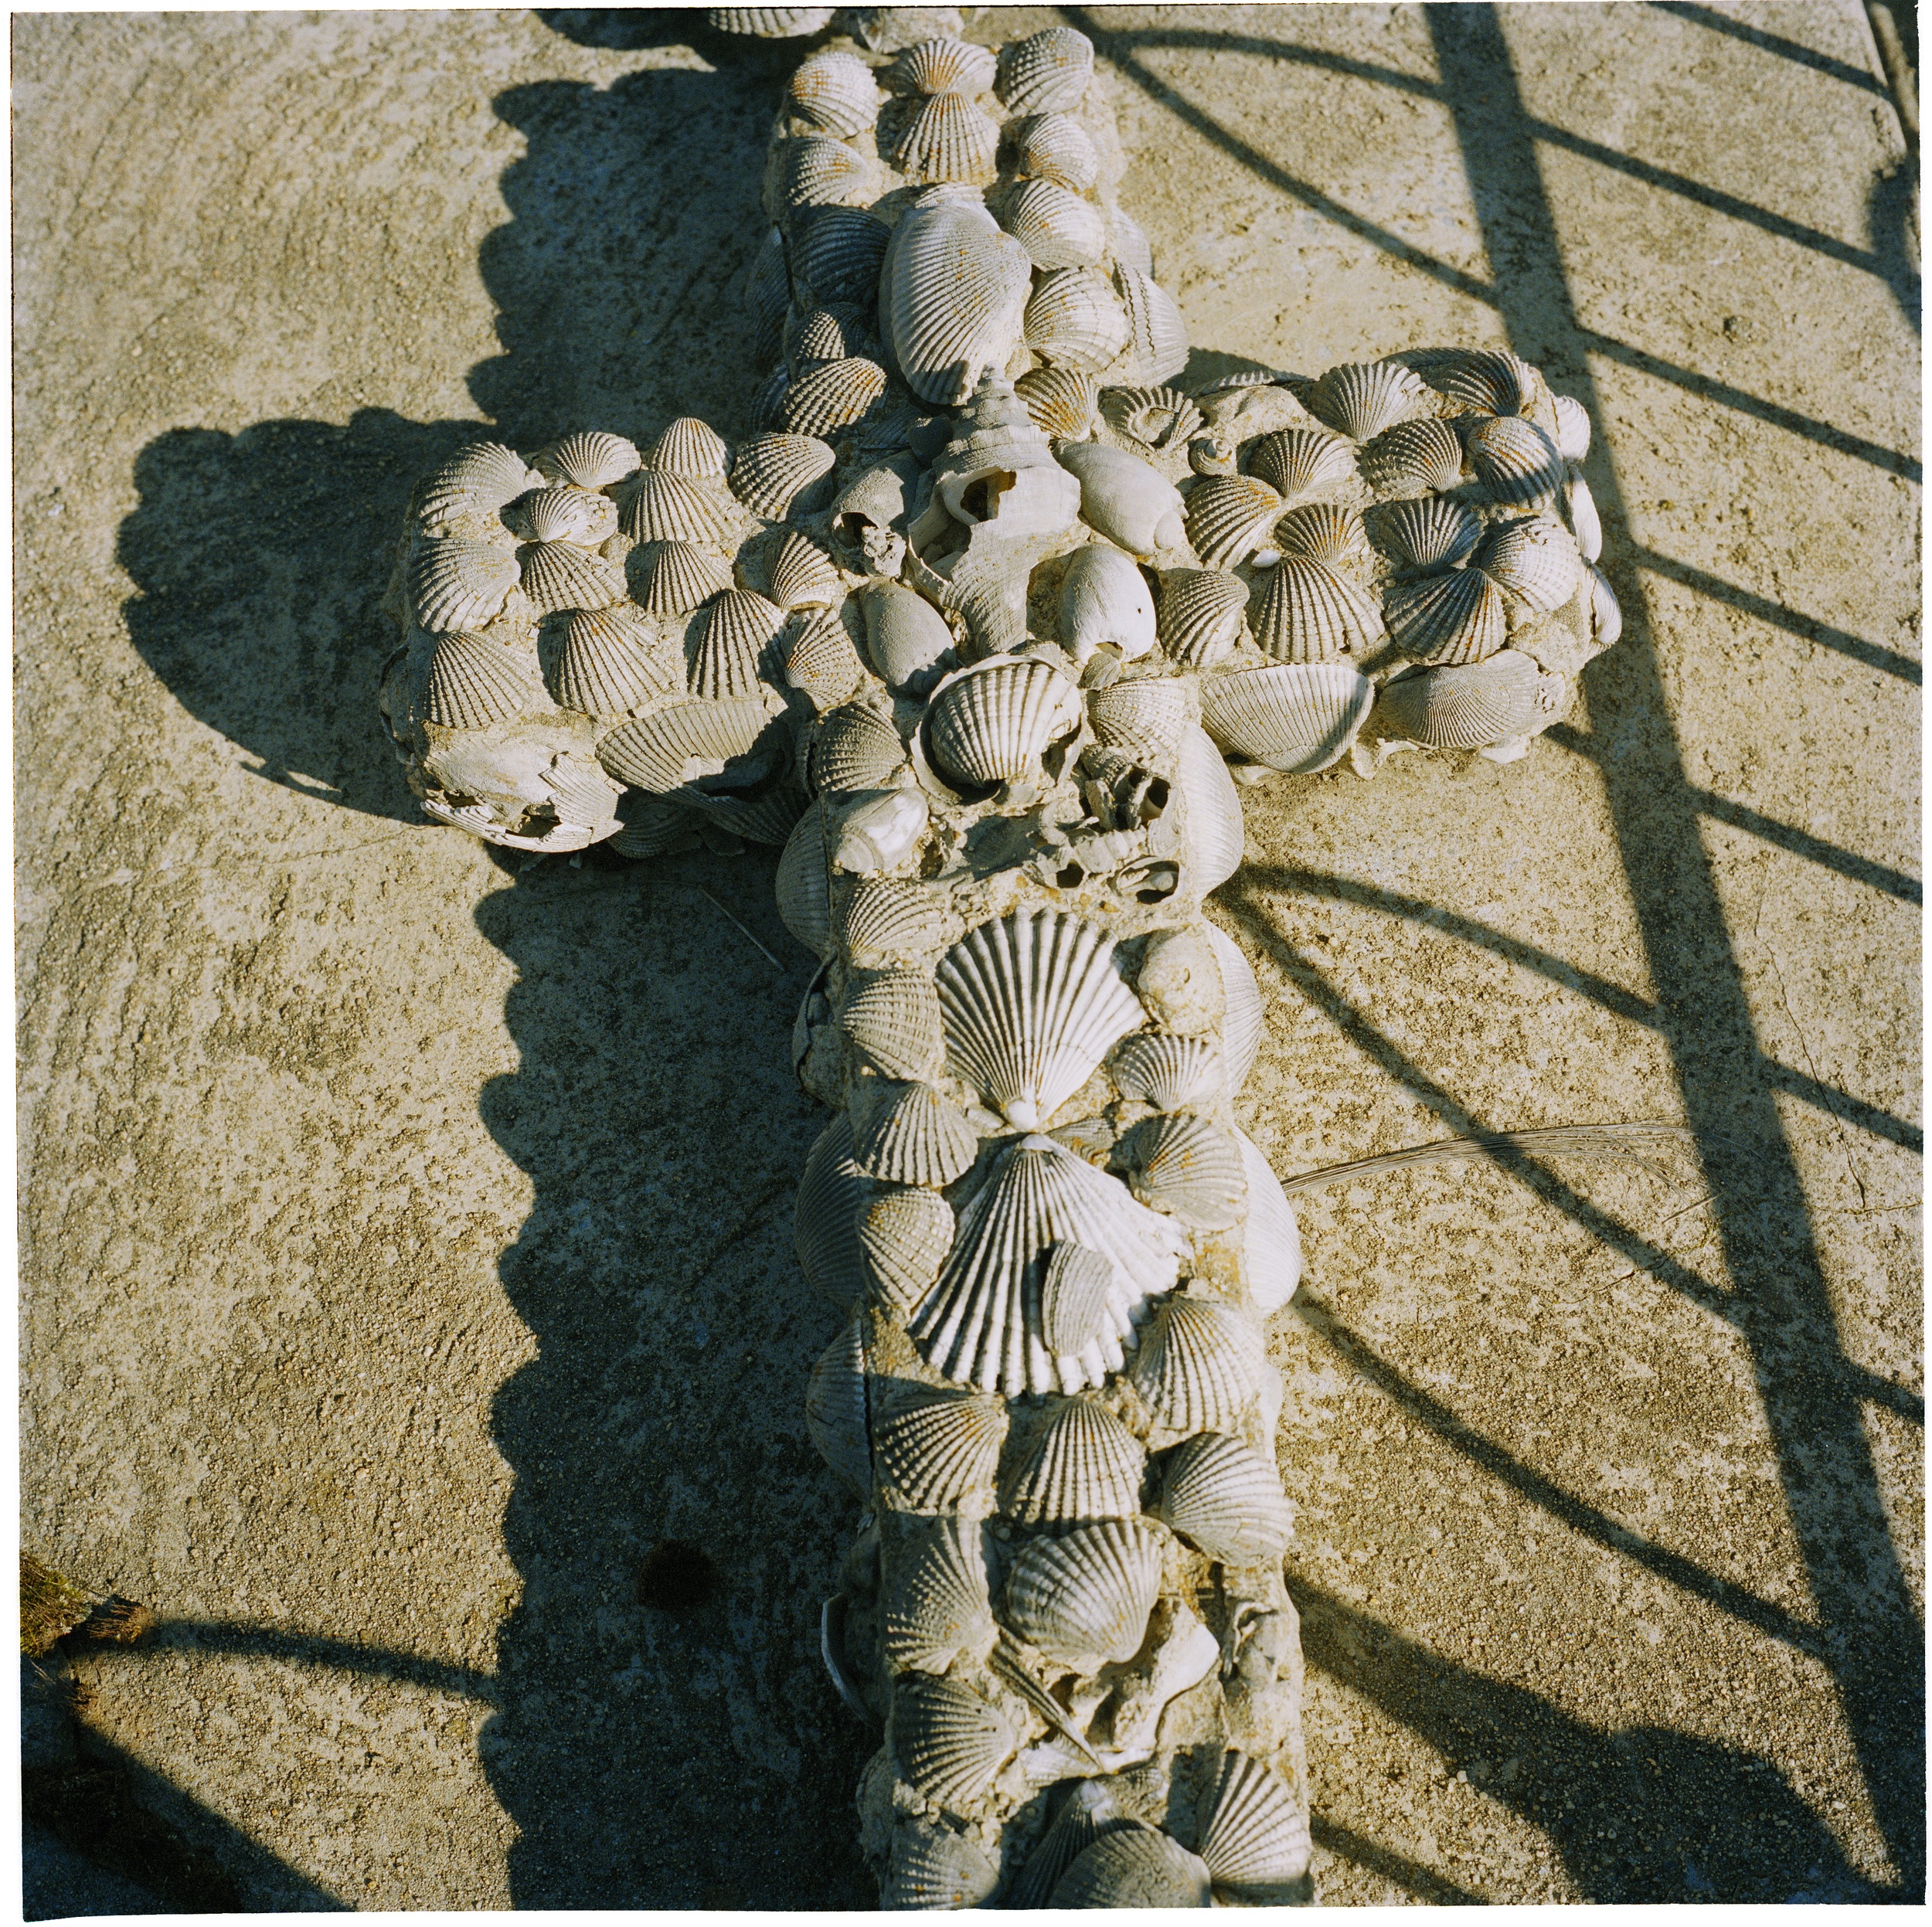 Cross of Shells (2008)